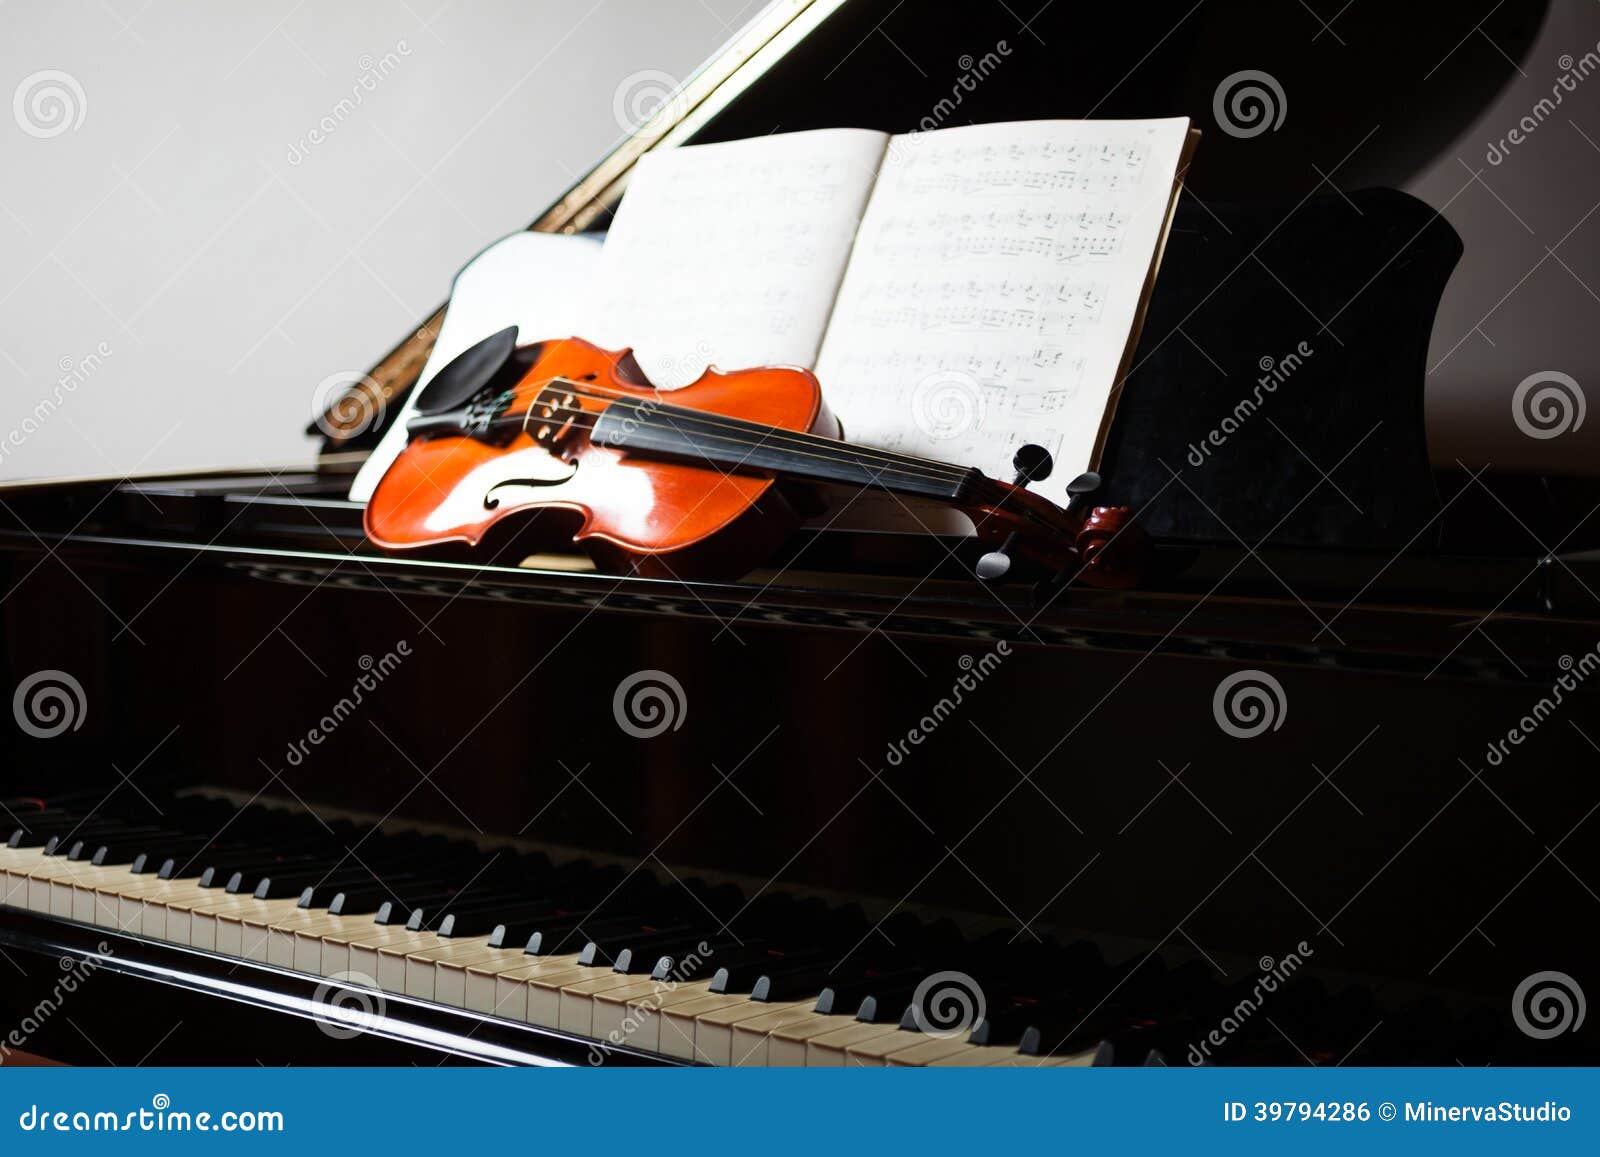 classical music scene